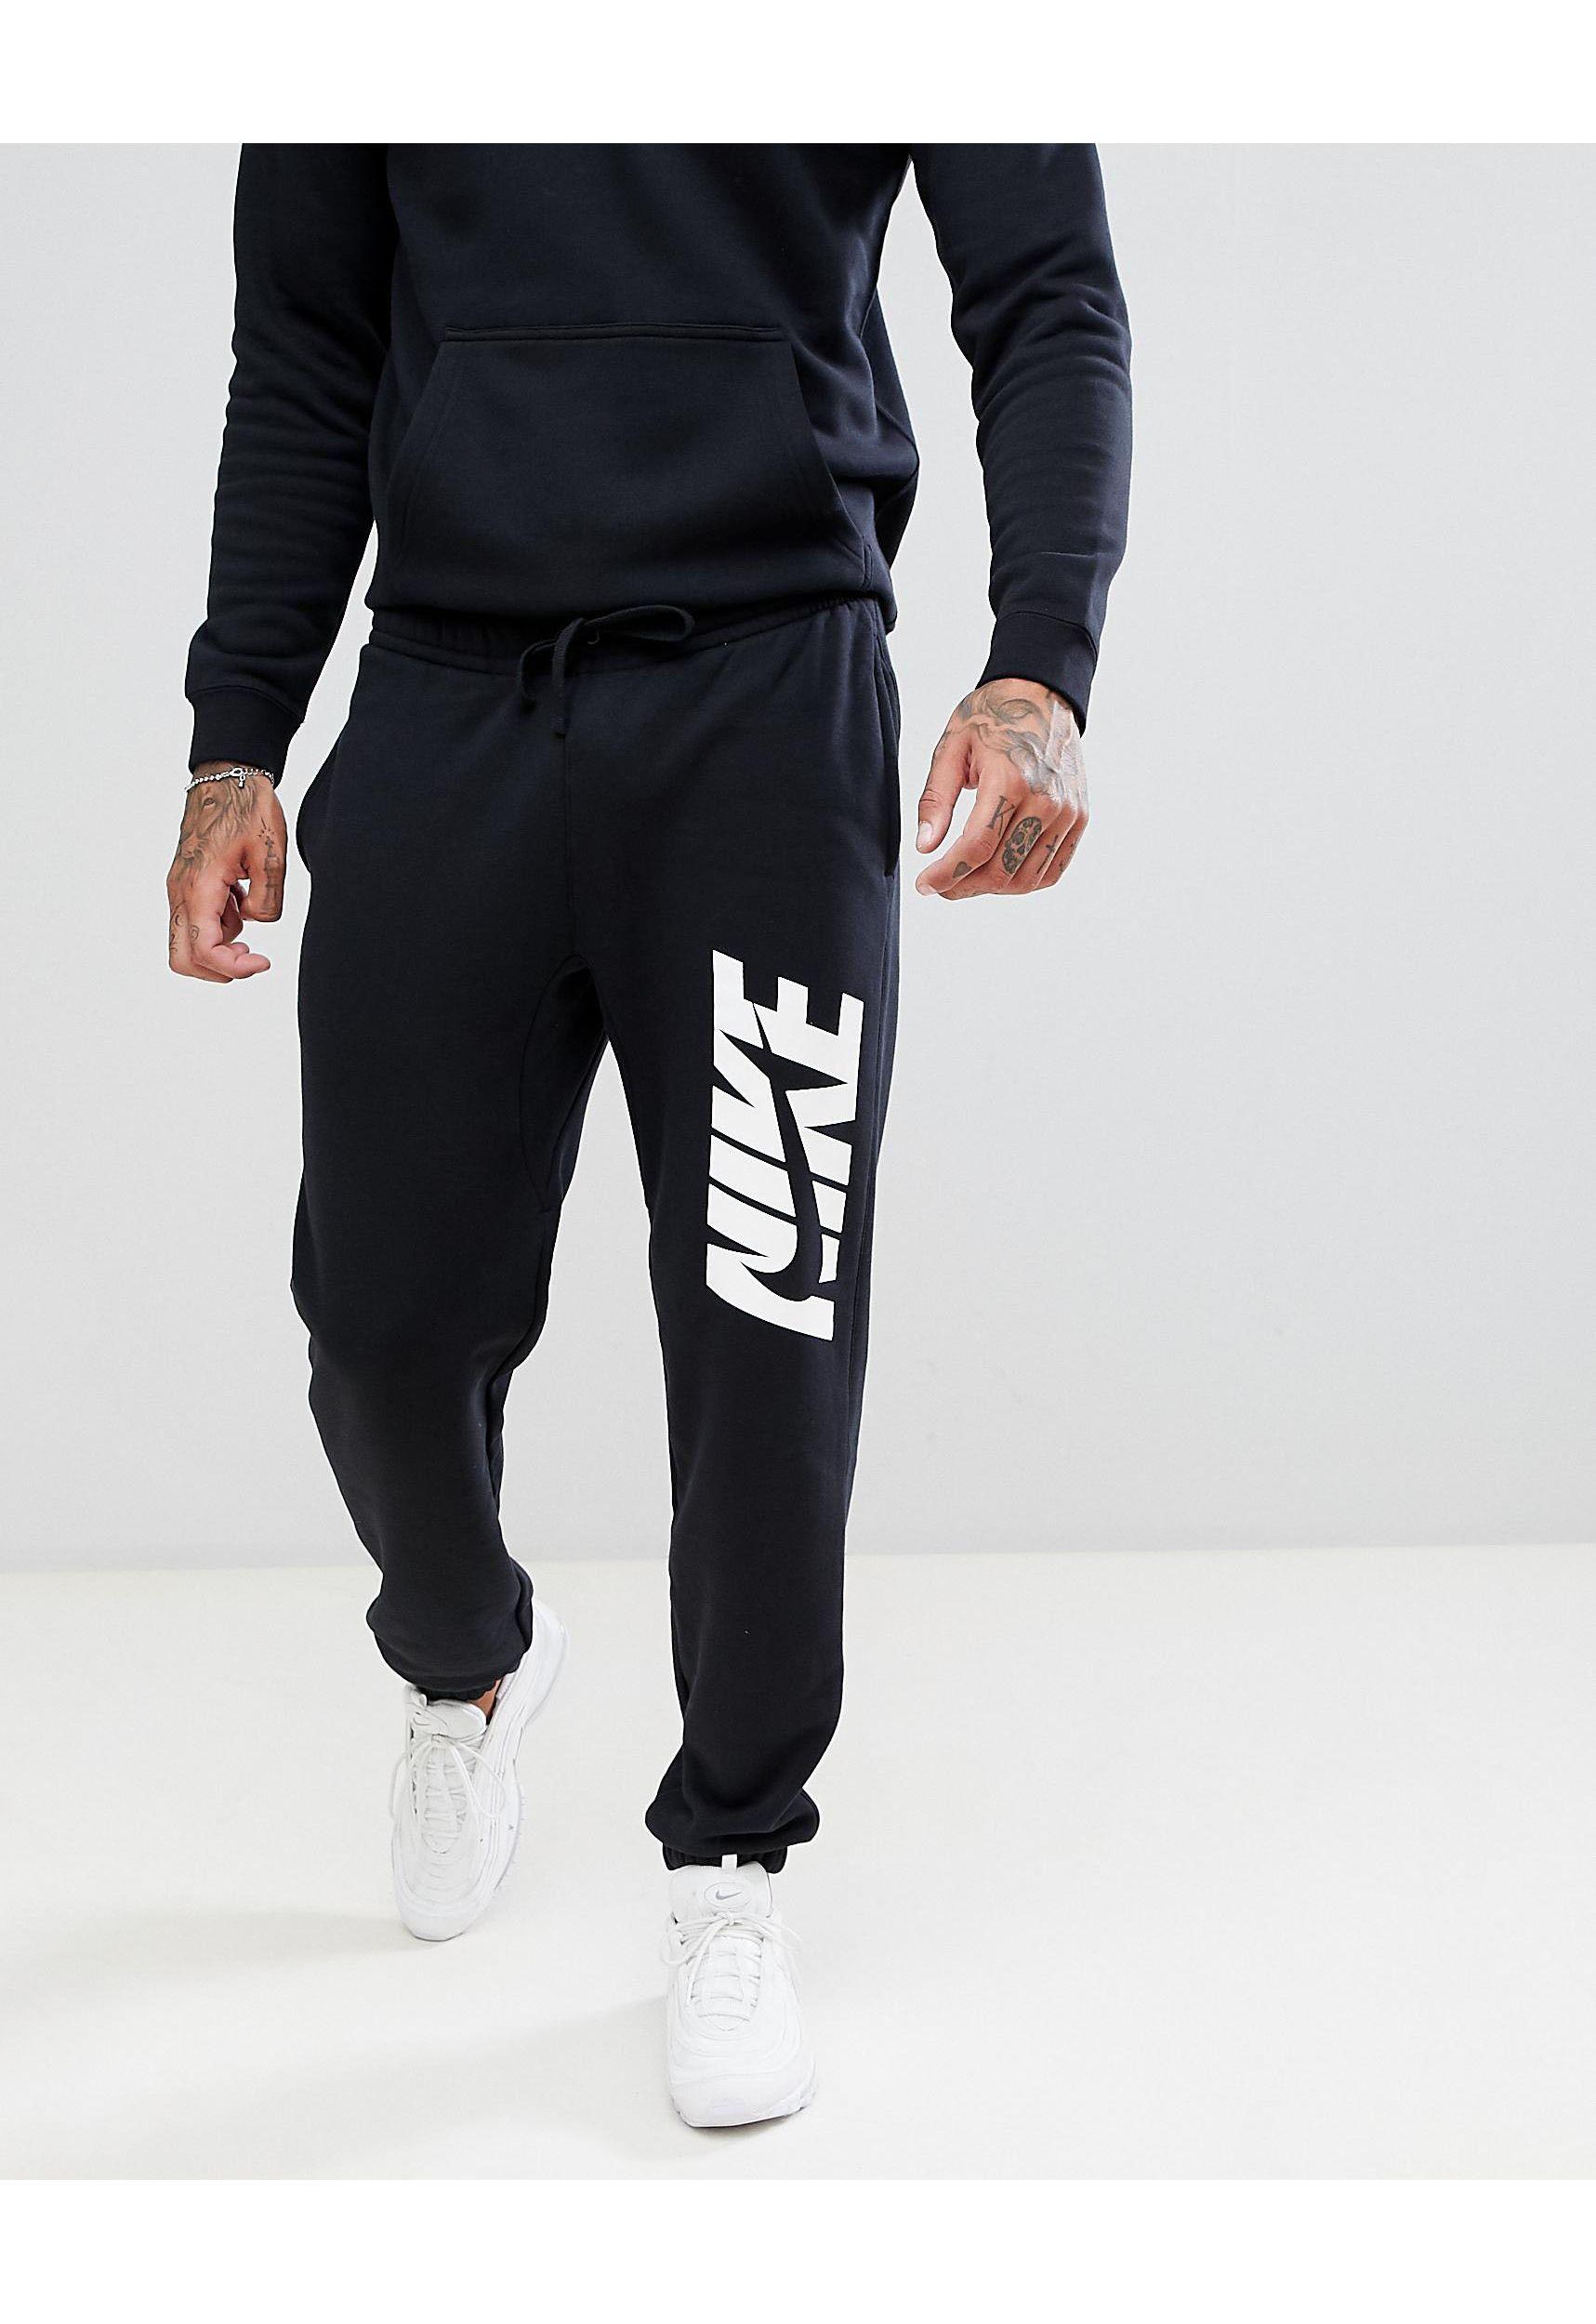 Nike Fleece Graphic Tracksuit Set in Black for Men - Lyst